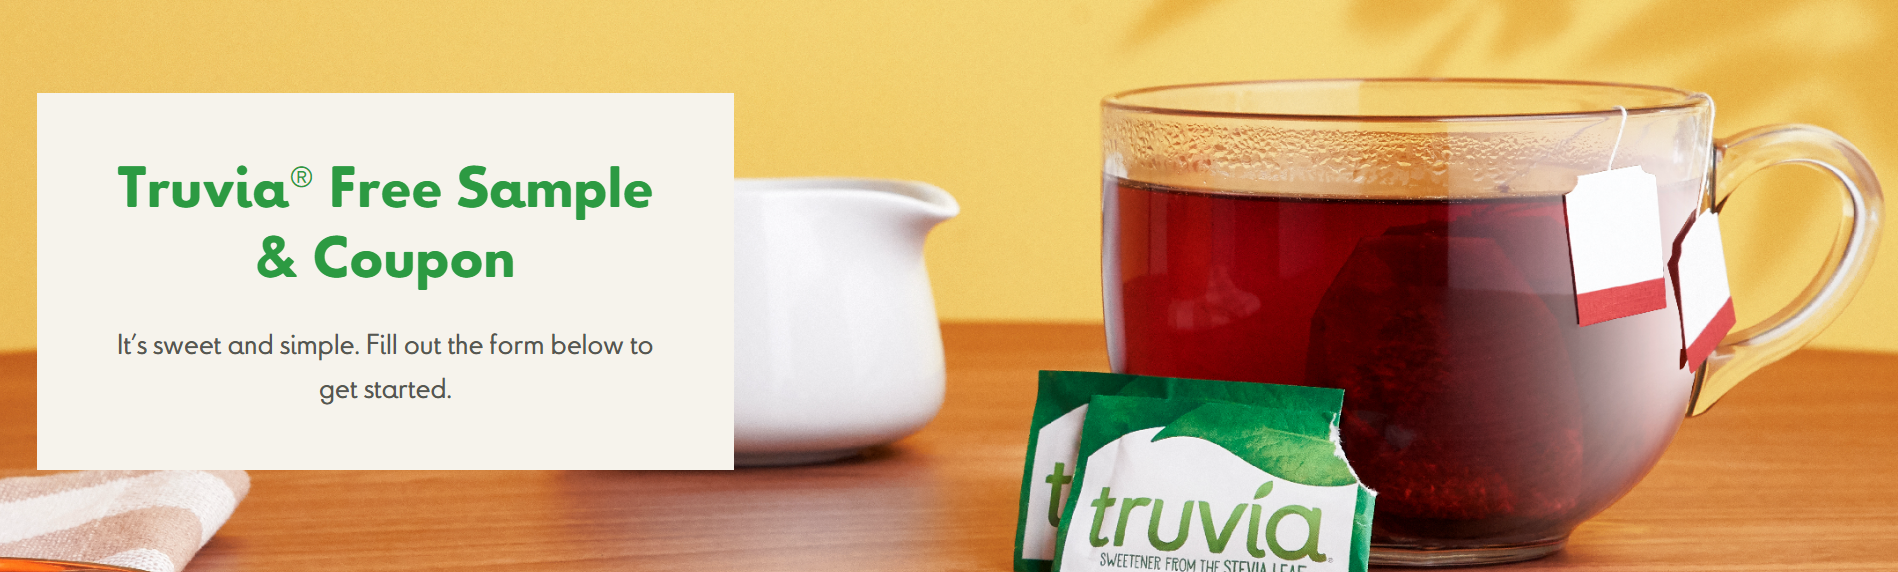 Free Truvia Natural Sweetener and Nectar Samples